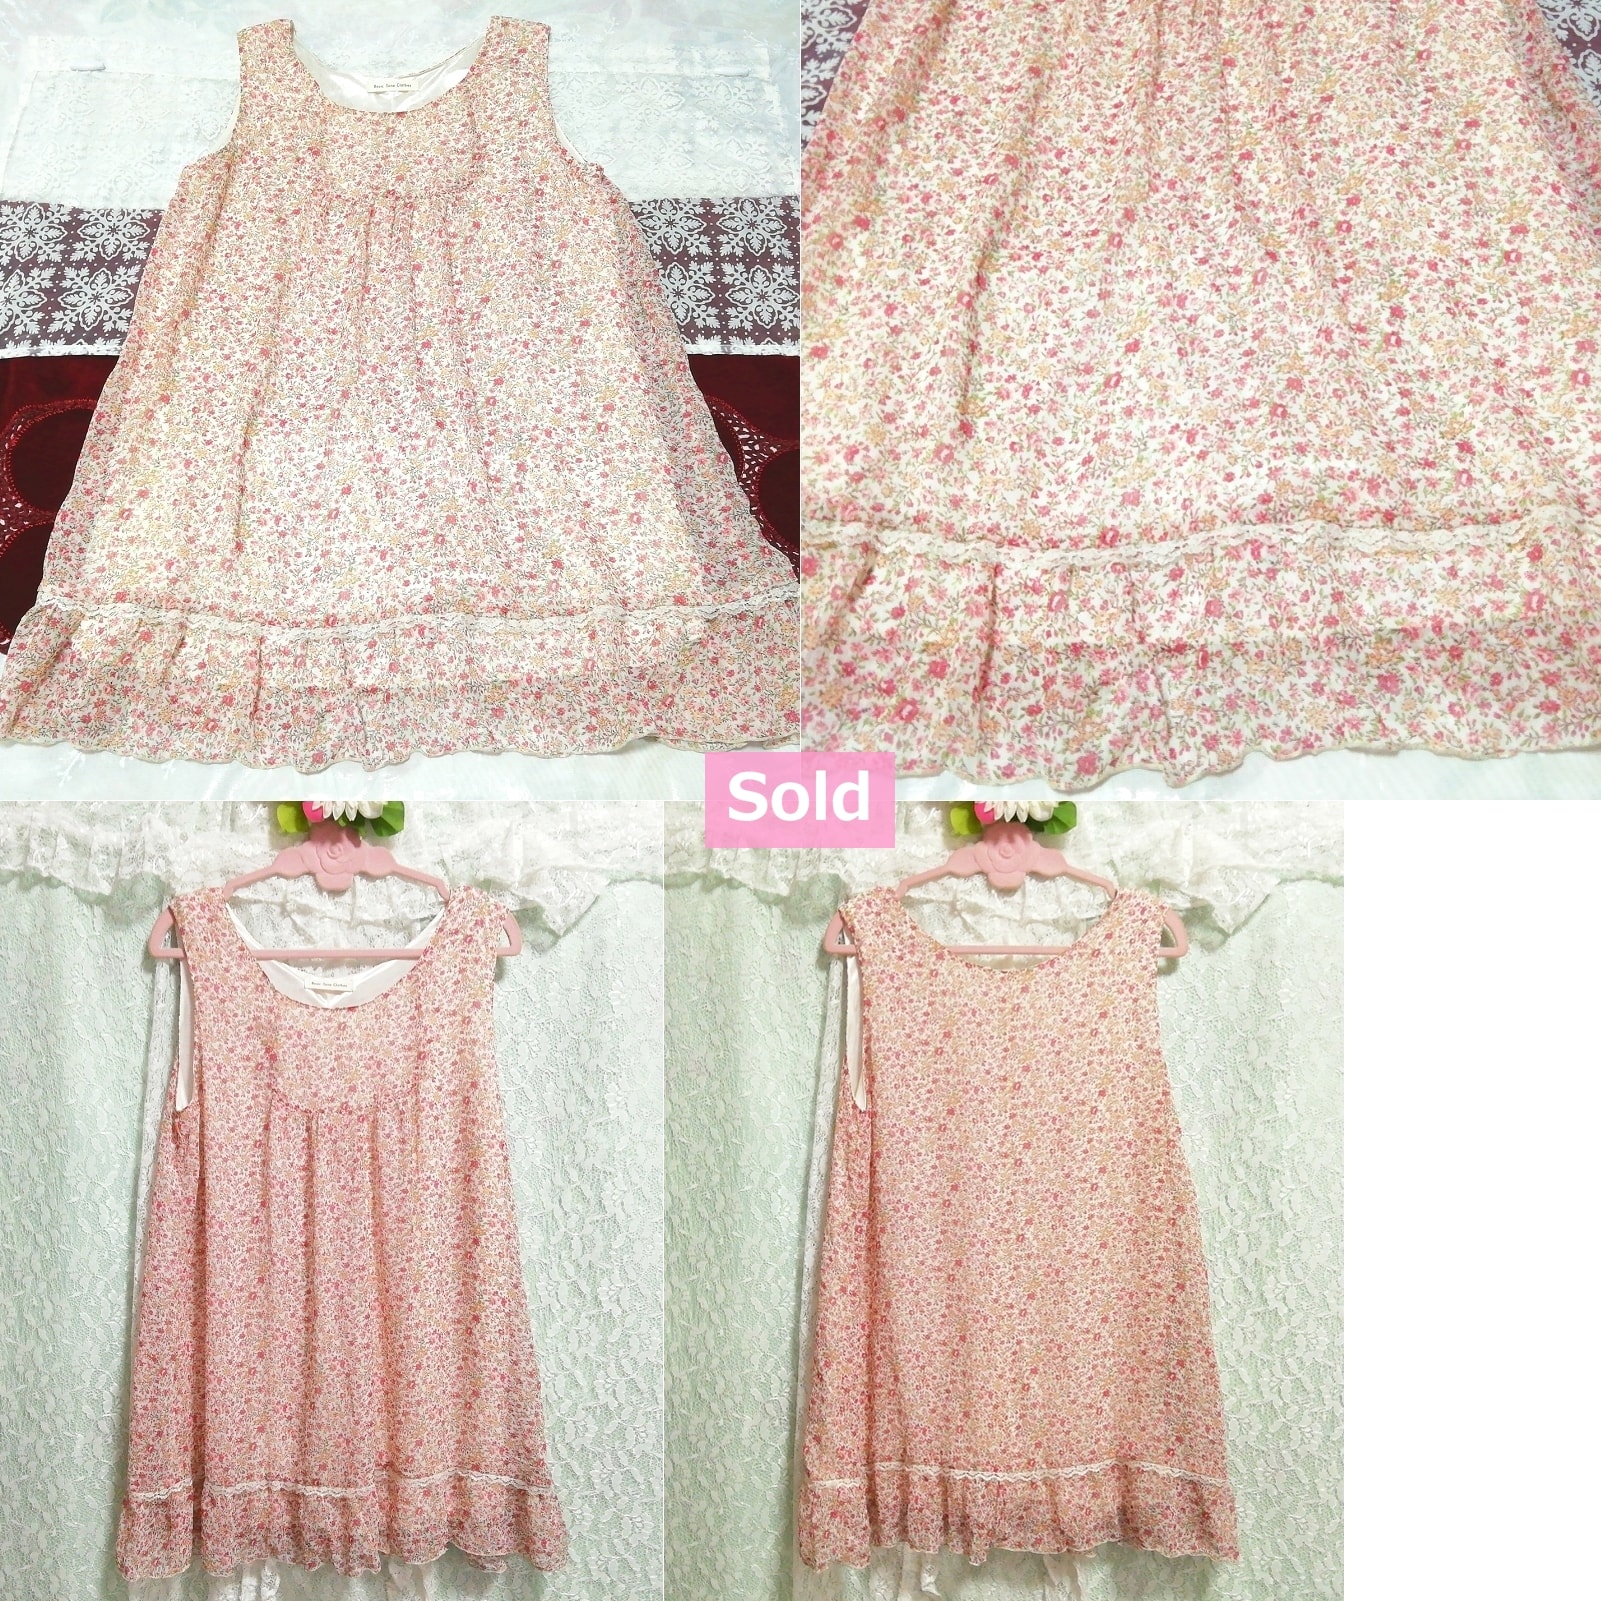 Pink floral pattern chiffon flare sleeveless negligee nightgown half dress, knee length skirt, l size